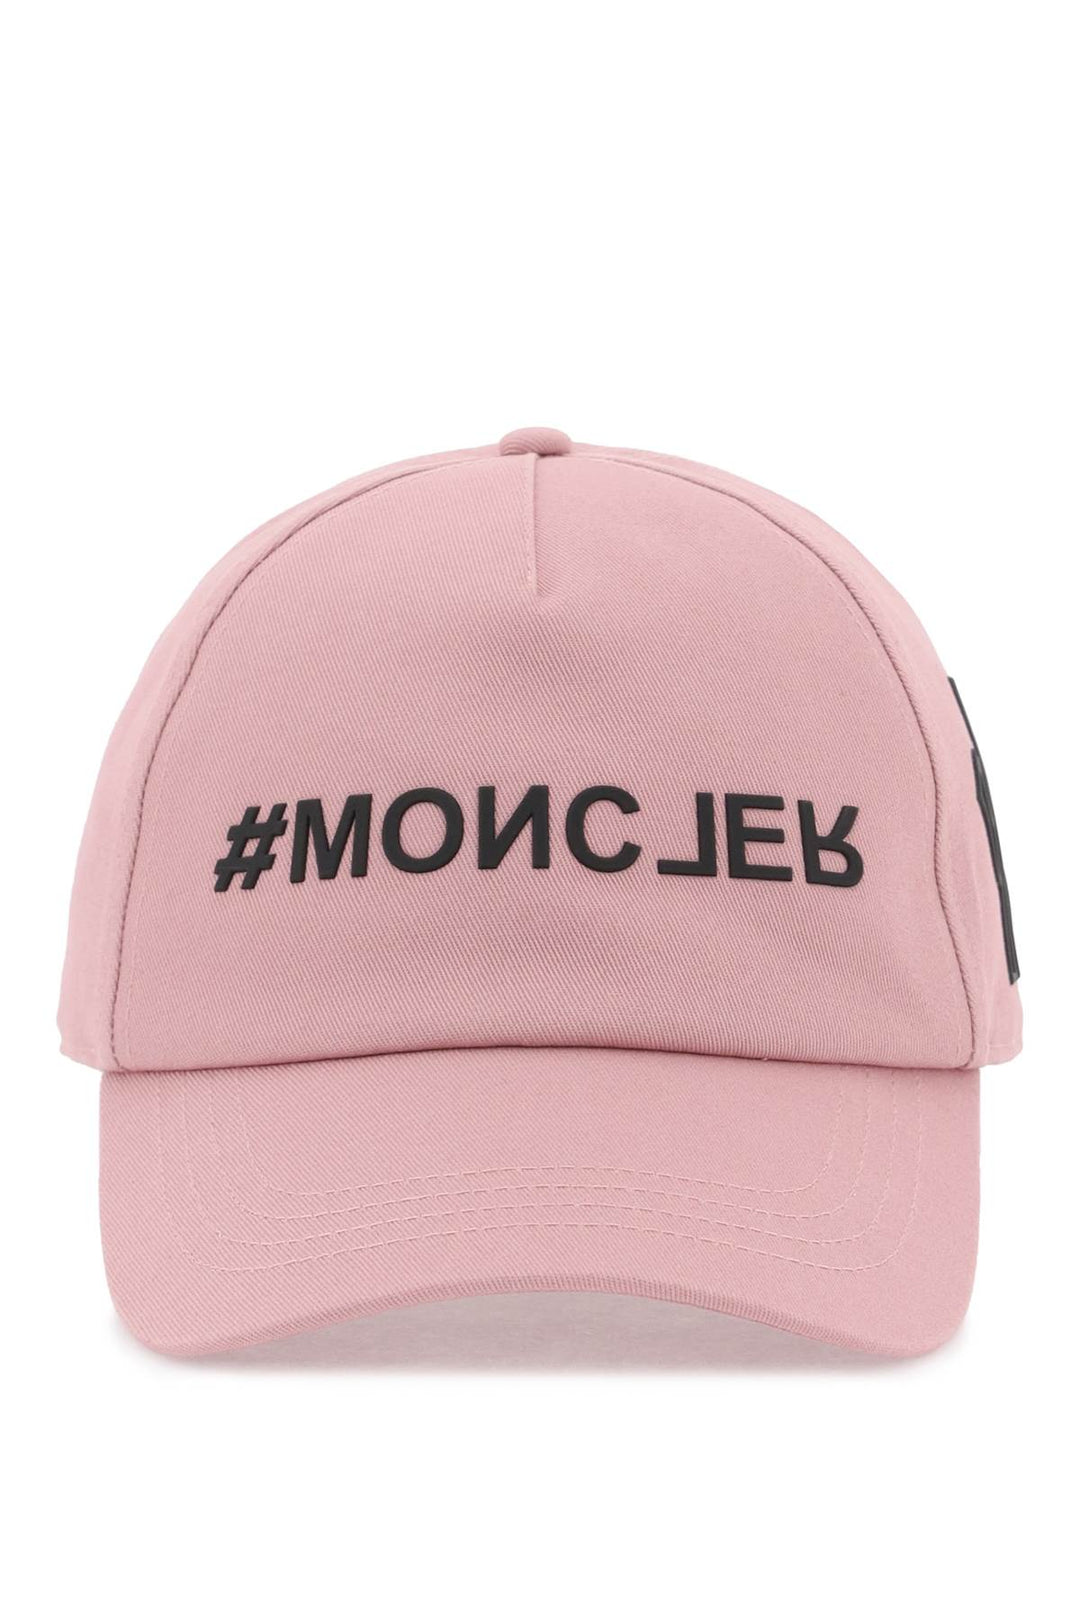 Moncler Grenoble Baseball Cap Made Of Gab   Pink